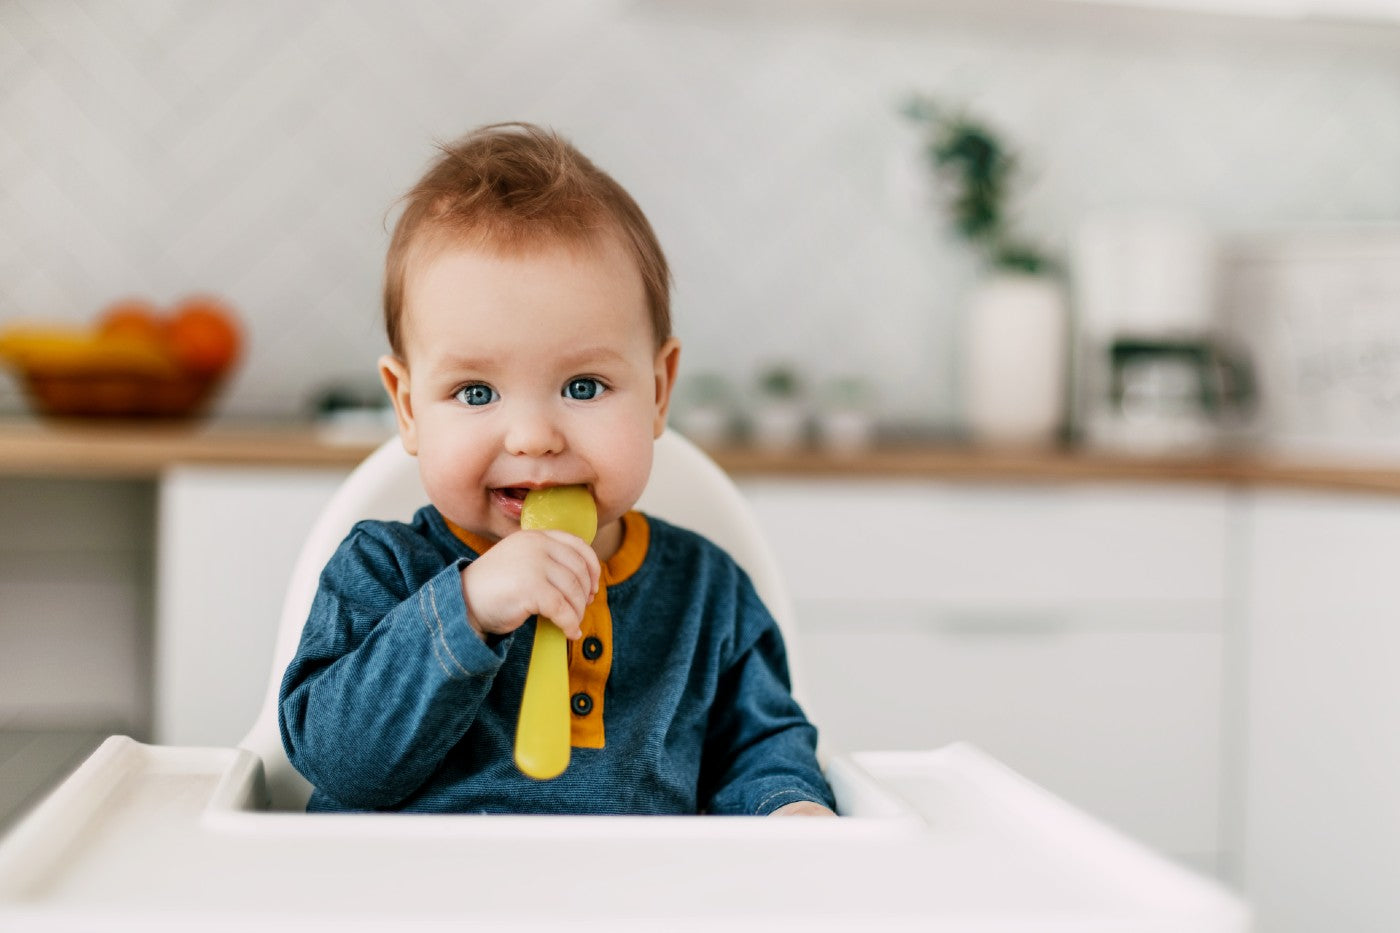 Baby & Toddler Weaning Utensils, Baby Feeding Spoons